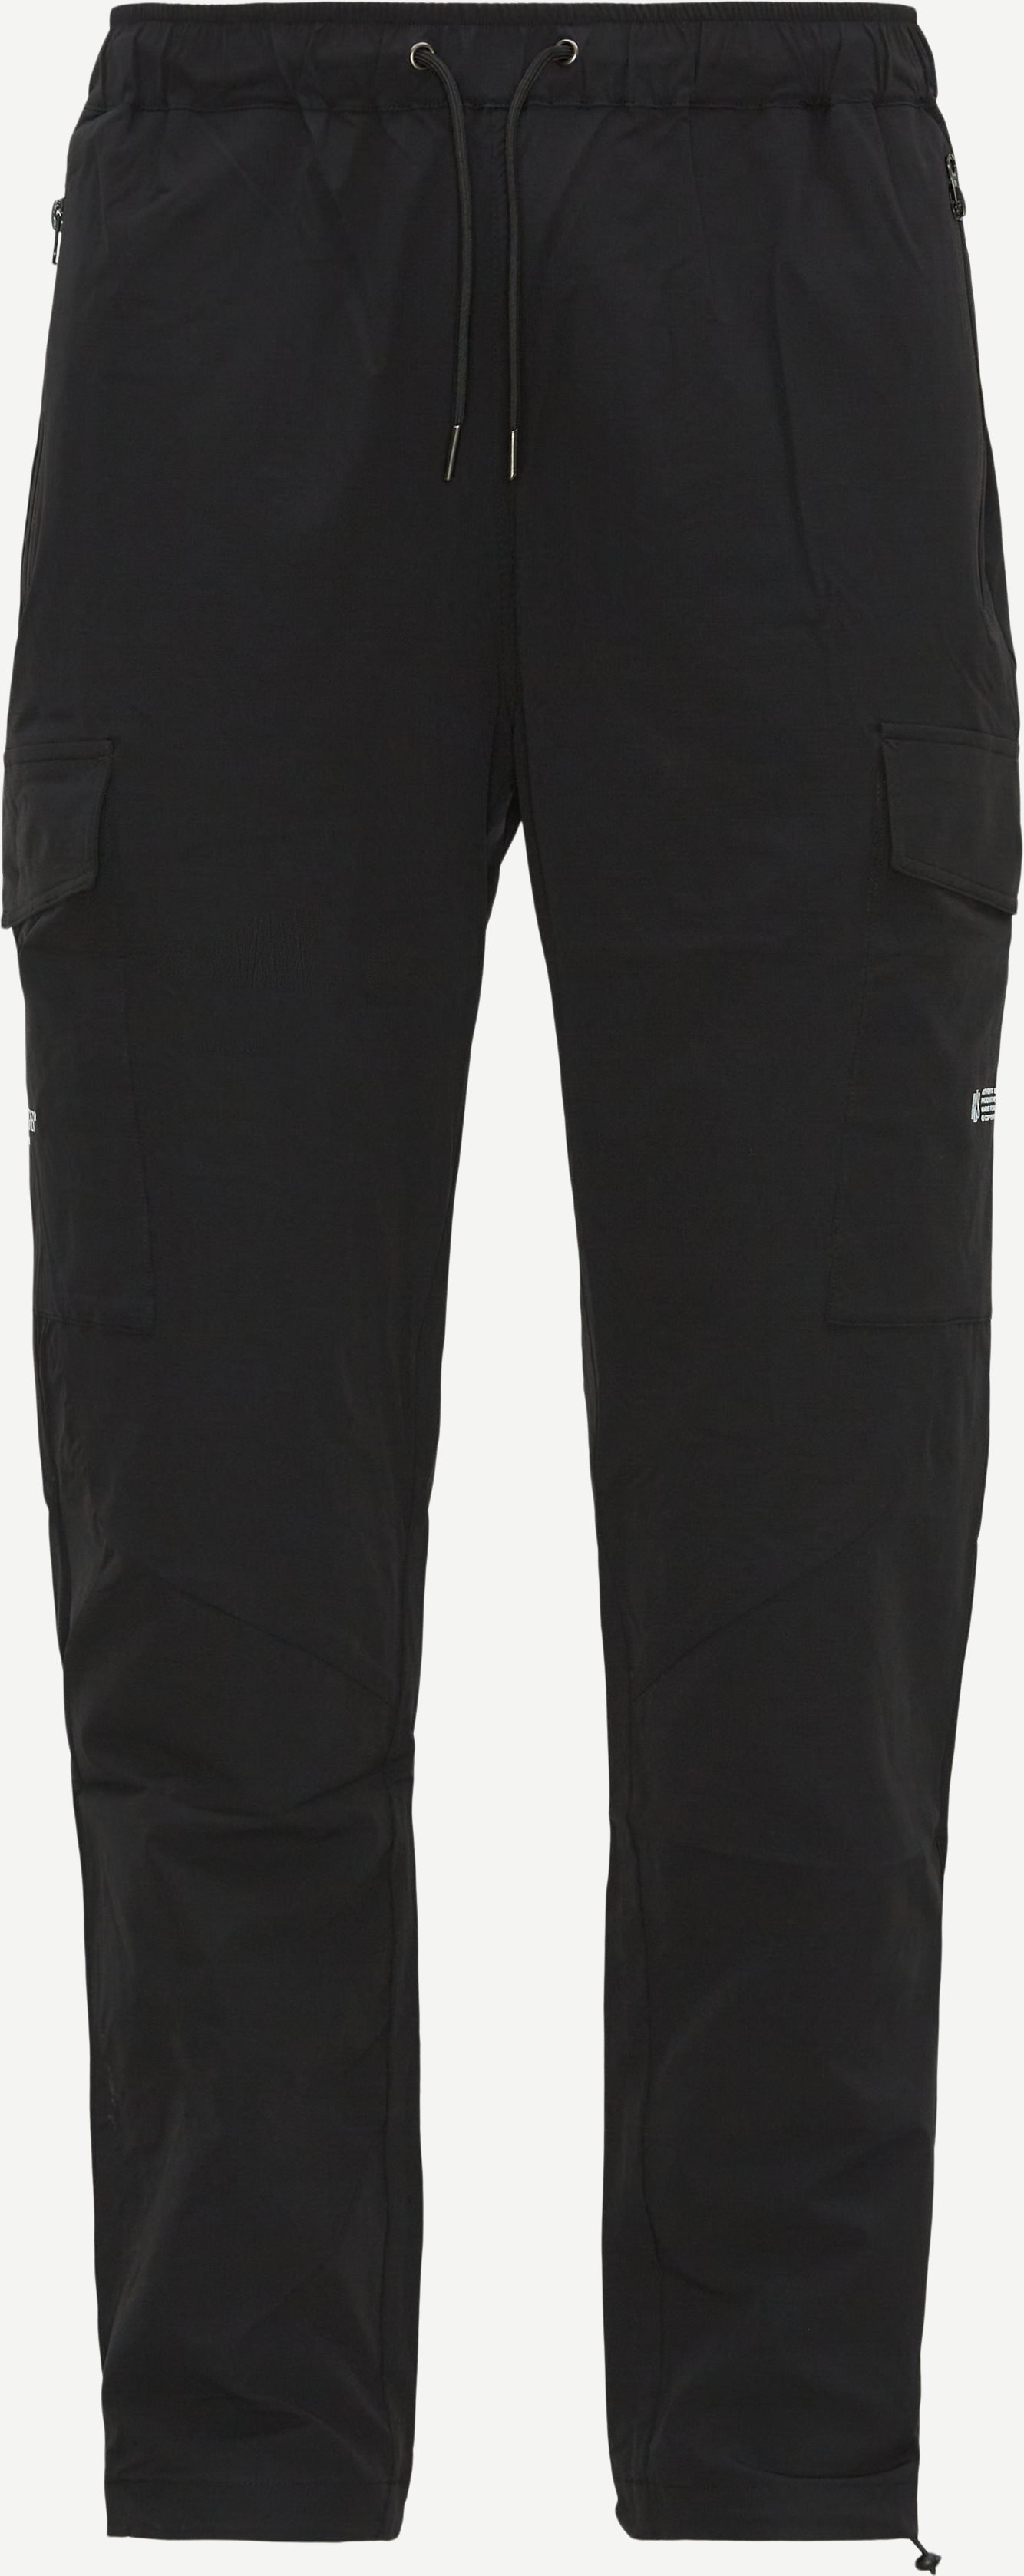 BLS Trousers TECH CARGO PANTS 202308079 Black